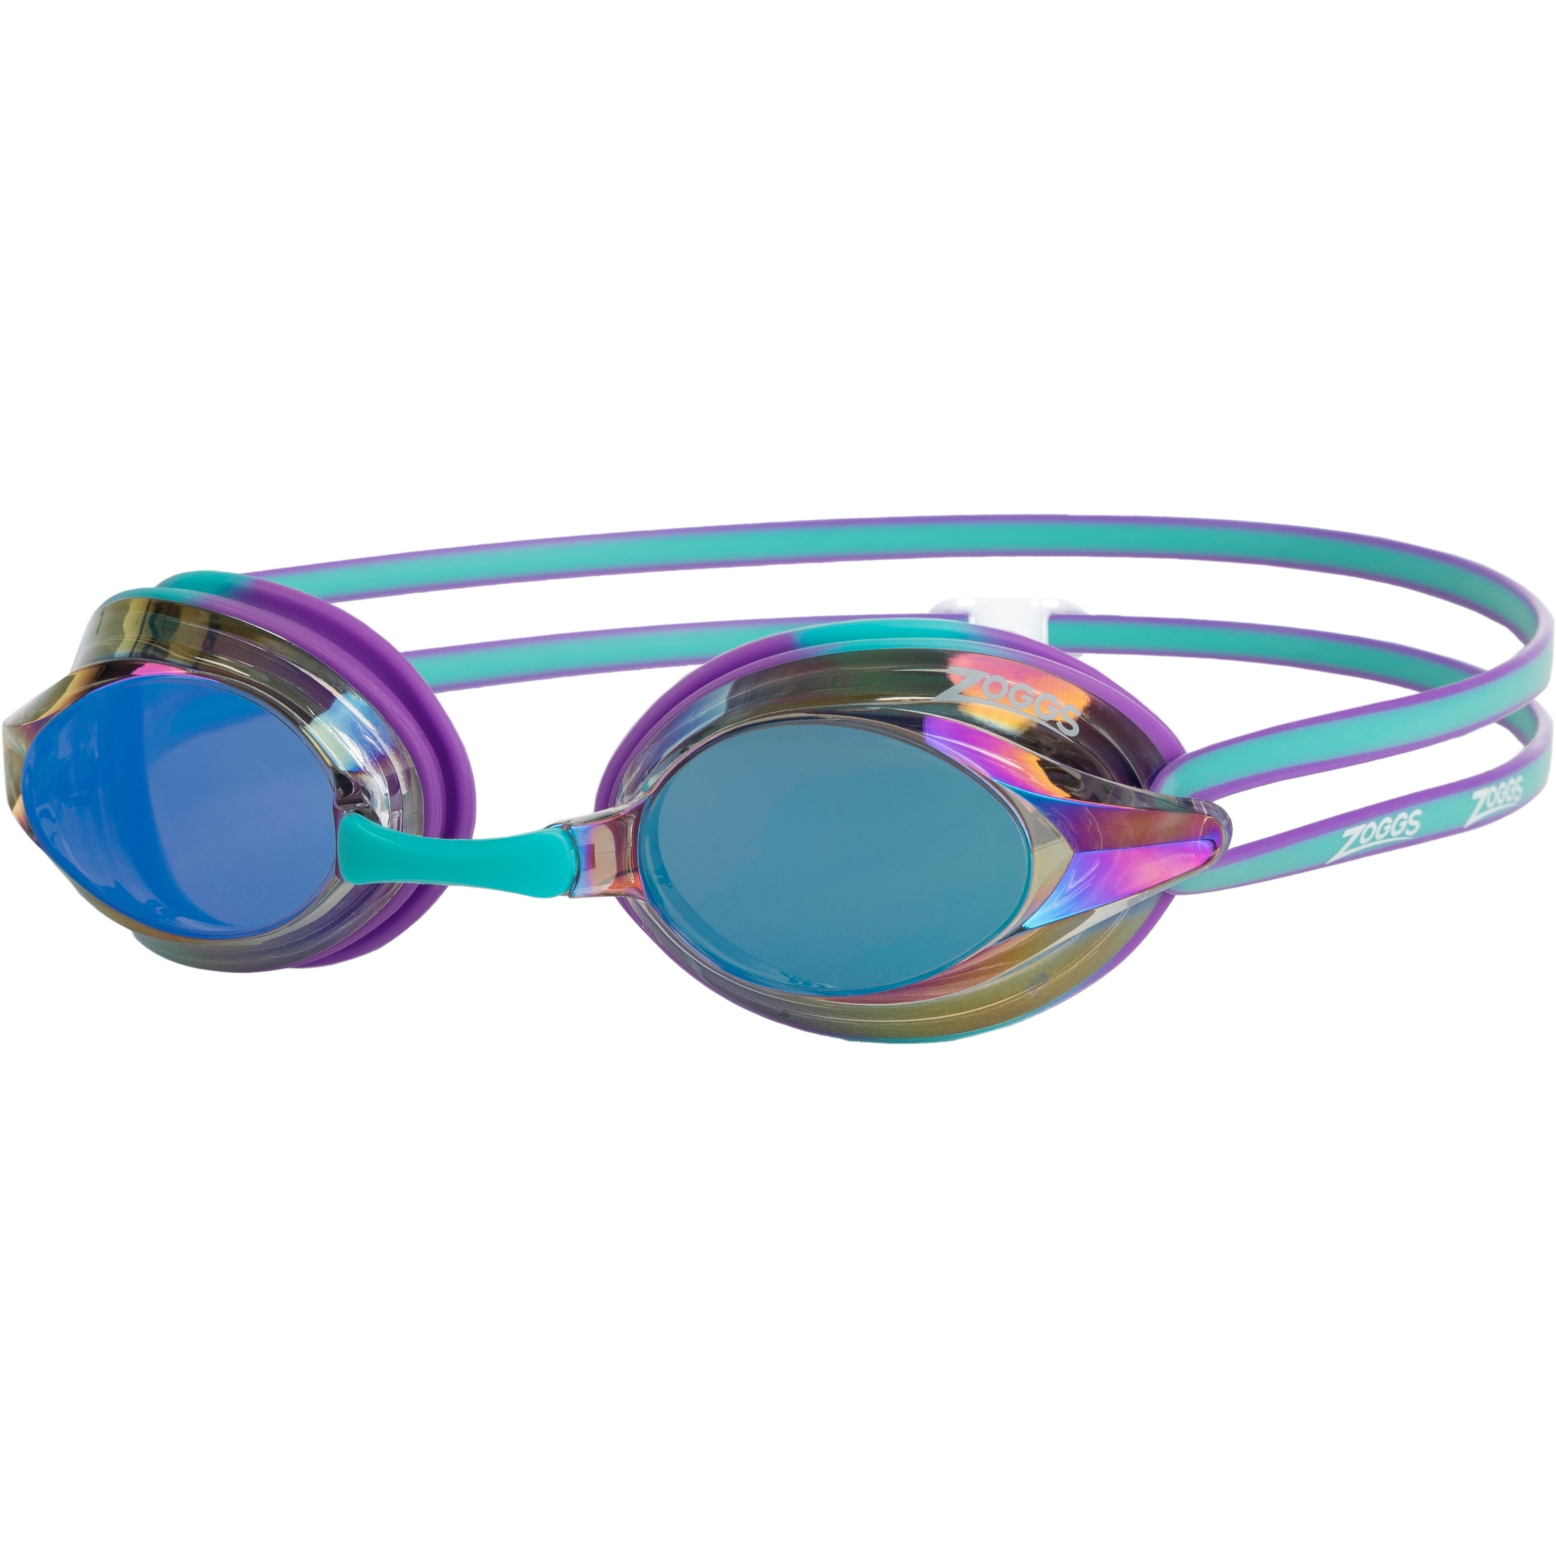 Productfoto van Zoggs Racer Titanium Zwembril - Mirror Blue Lenses - Violet/Turqoise